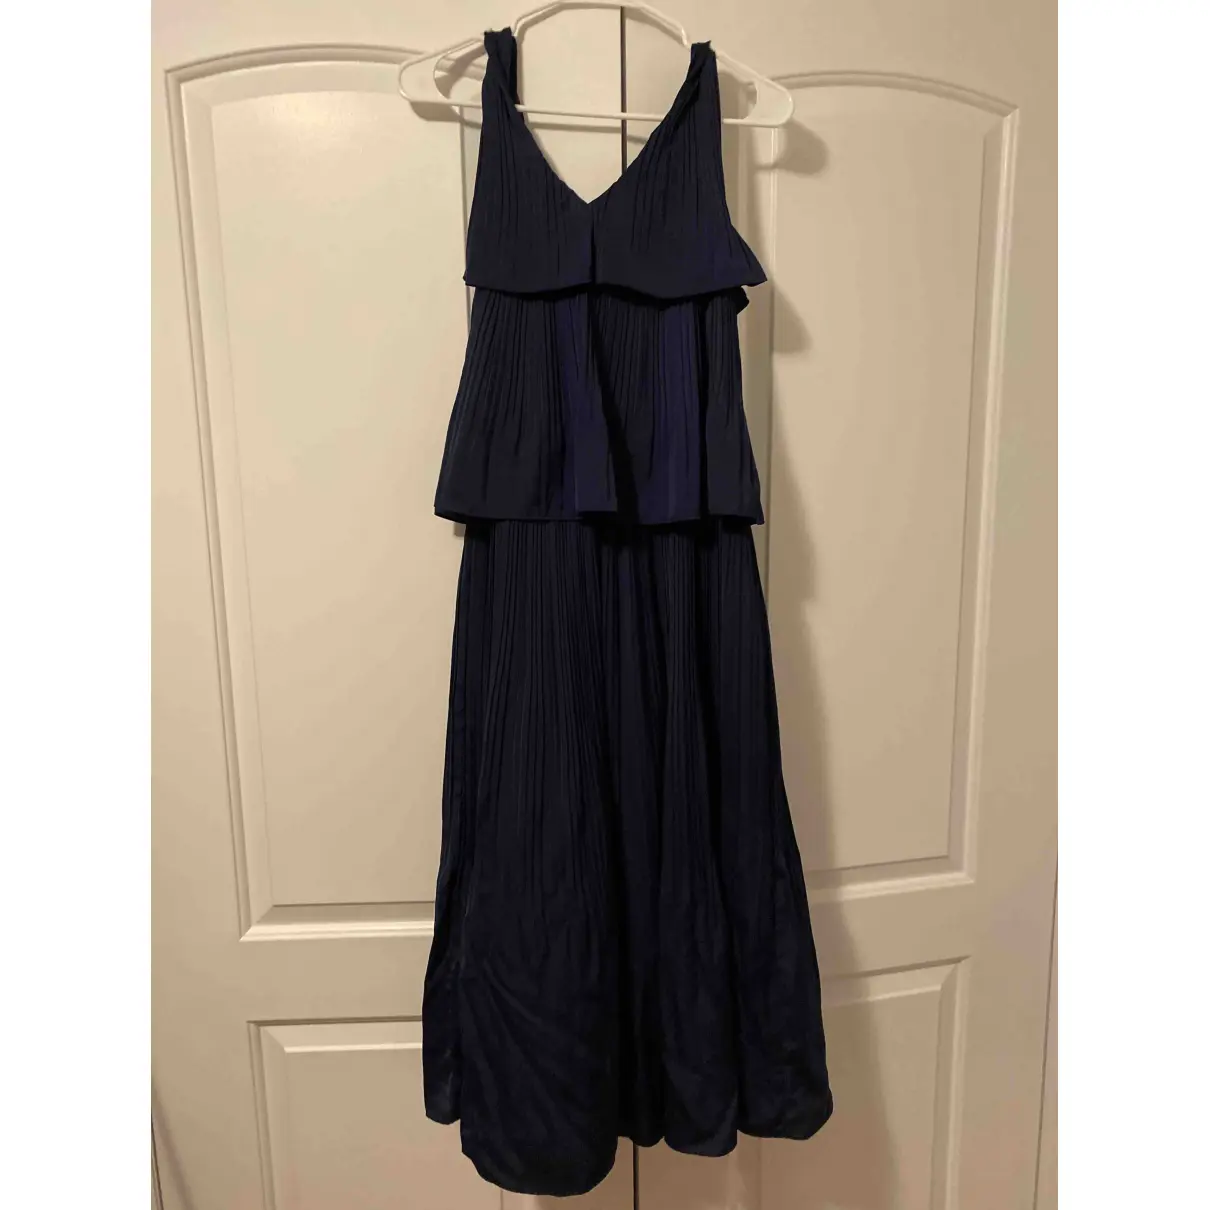 Buy Maje Spring Summer 2019 mid-length dress online